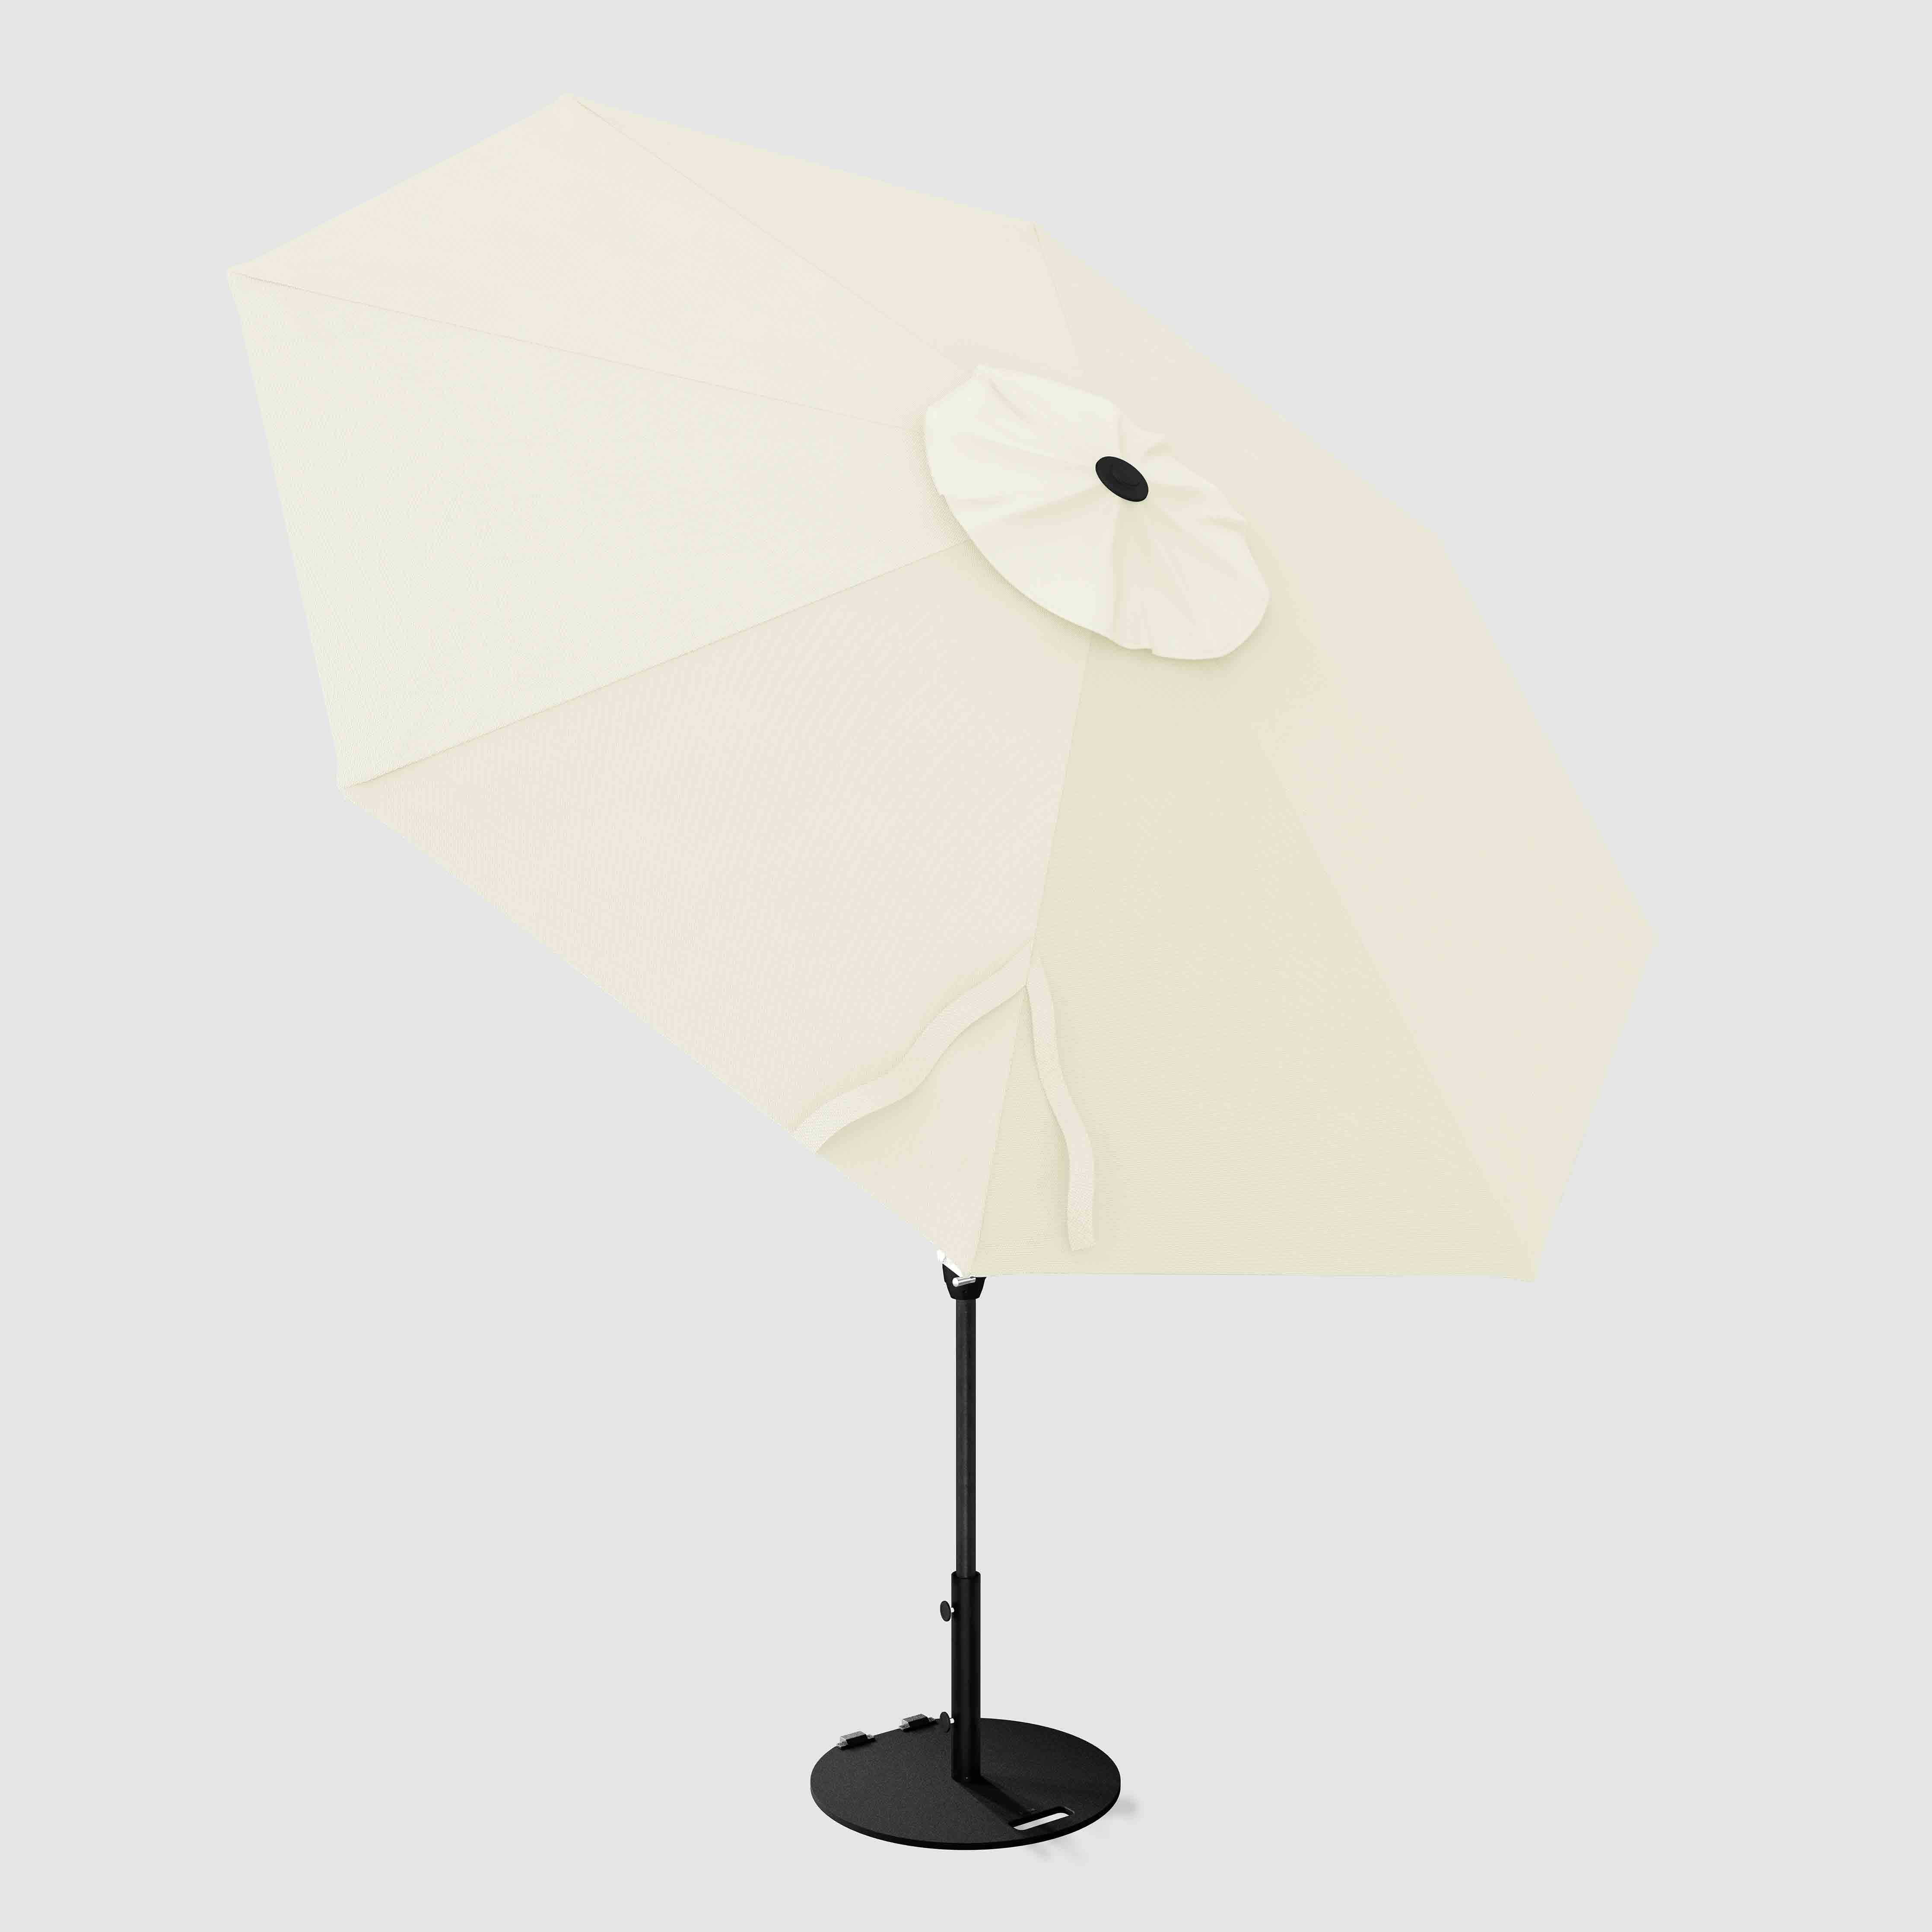 The Lean™ - Sunbrella Canvas Natural